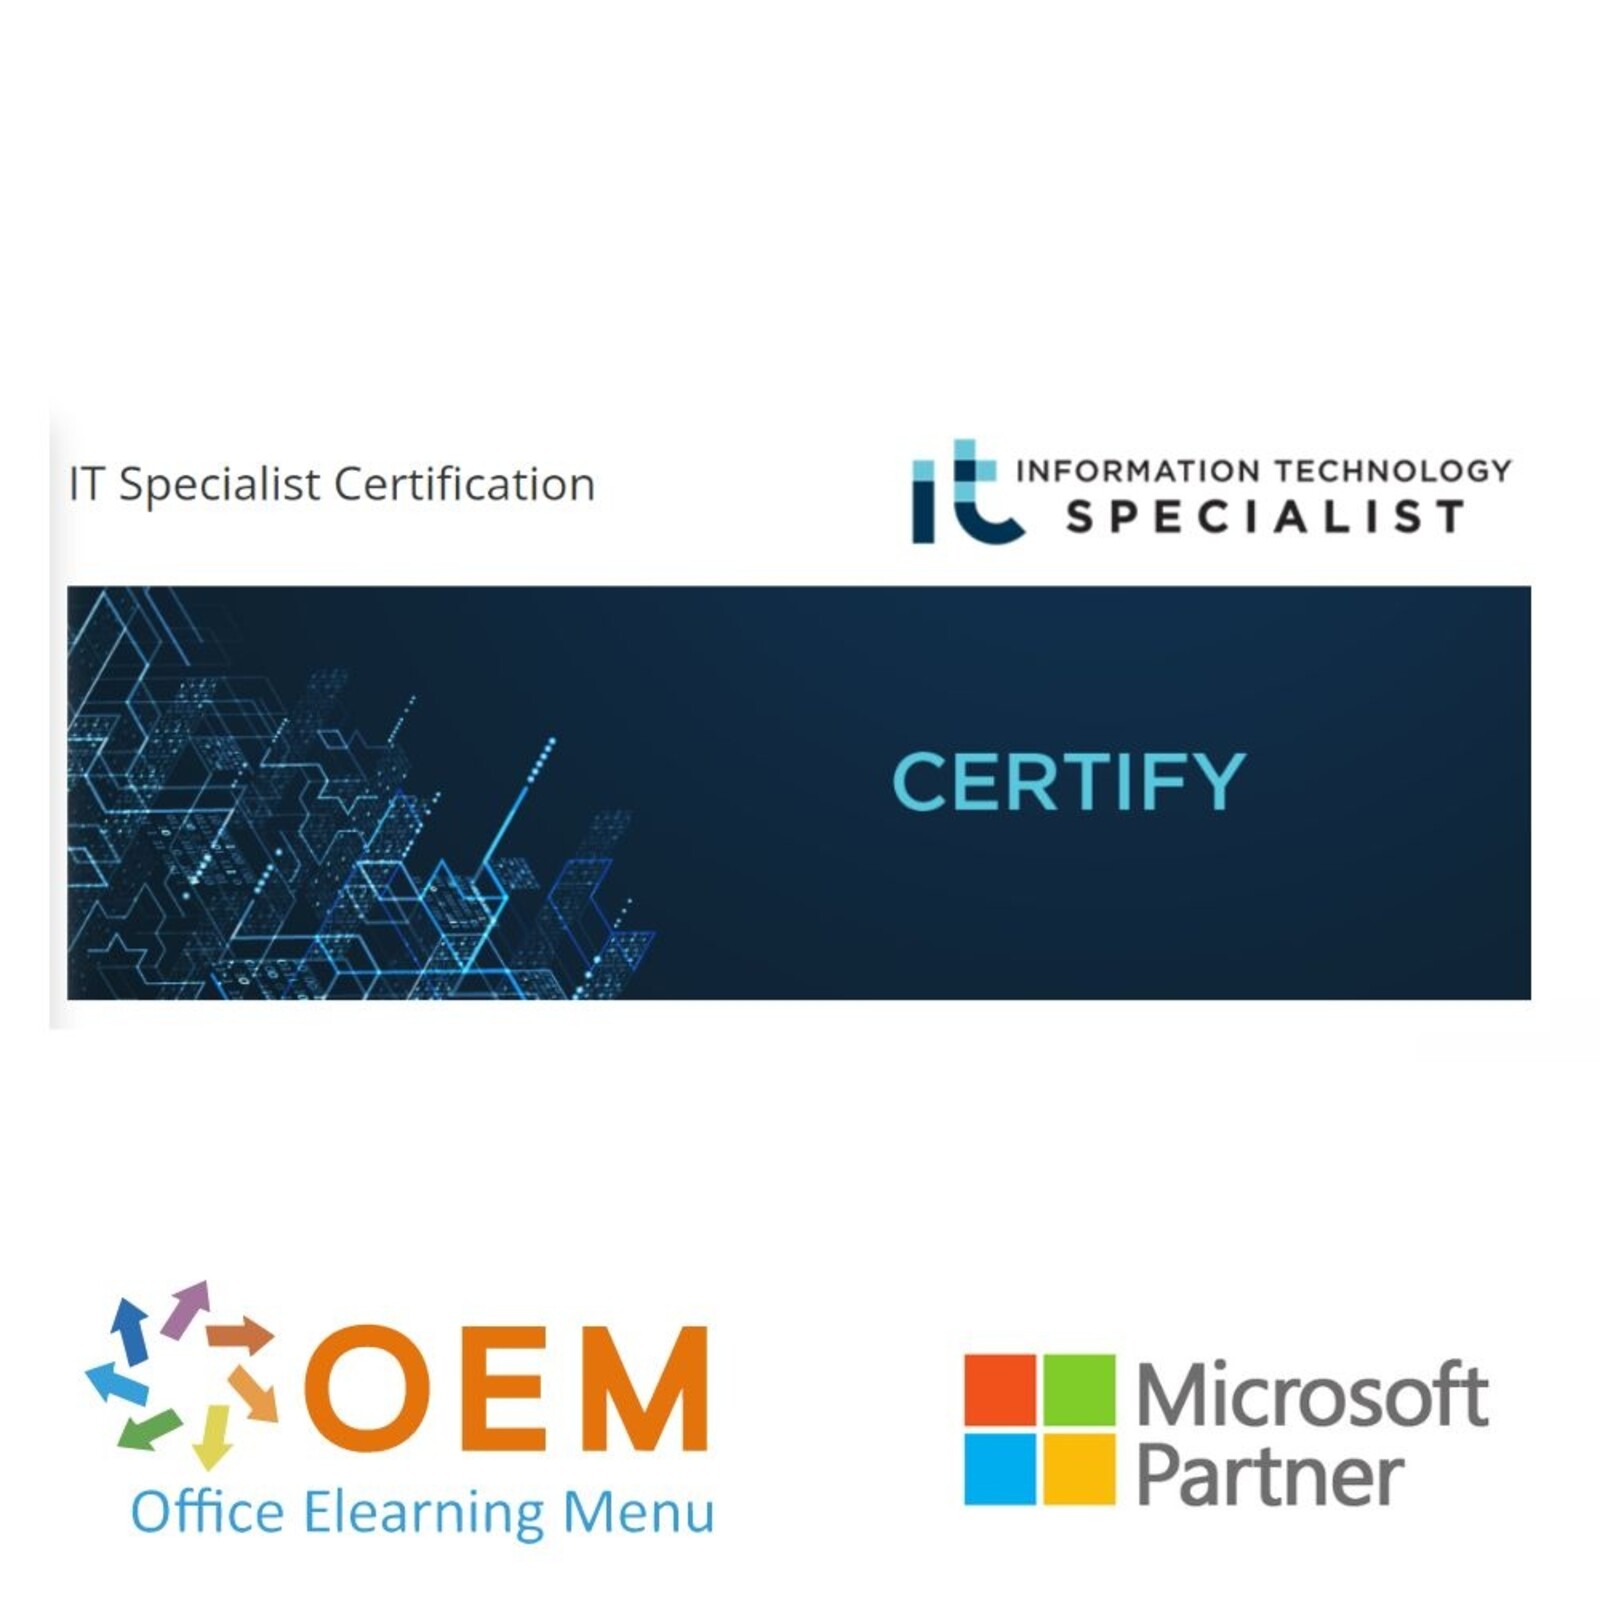 Certiport - Pearson Vue Examen Cybersecurity